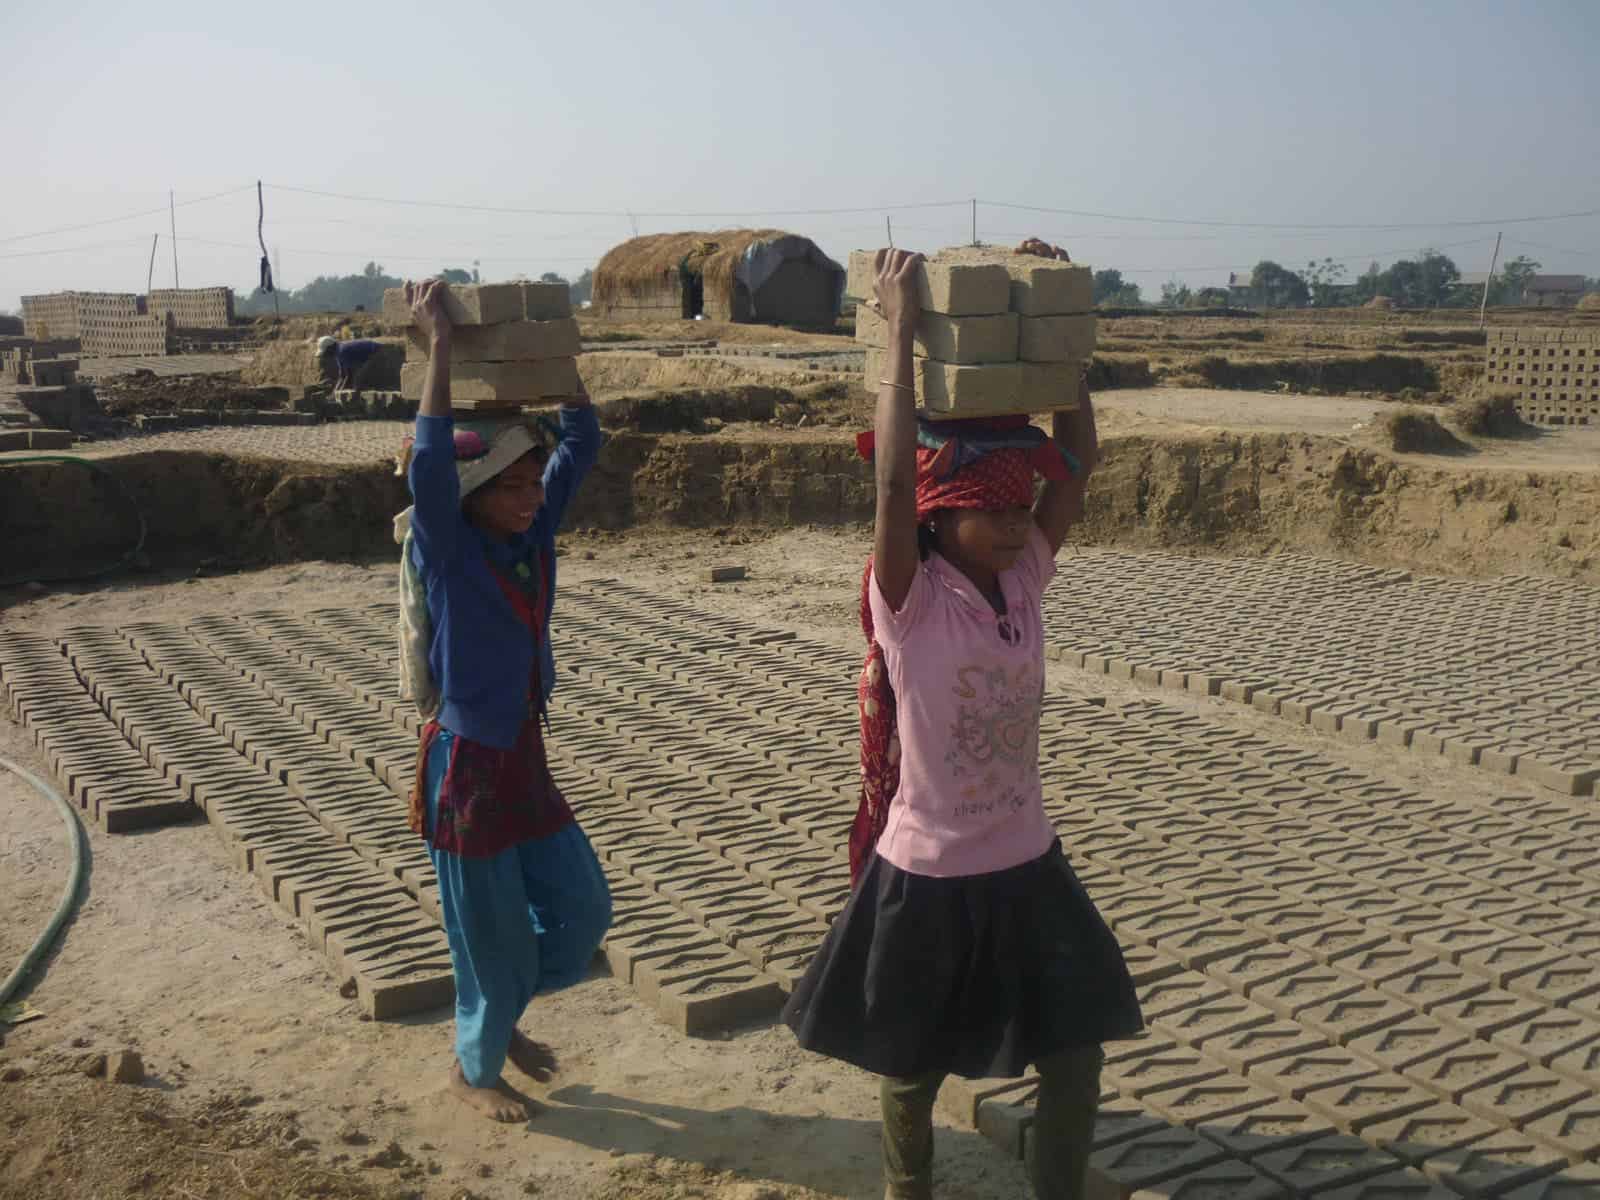 Nepali girls working in brick factory. Credit: Wikimedia Commons